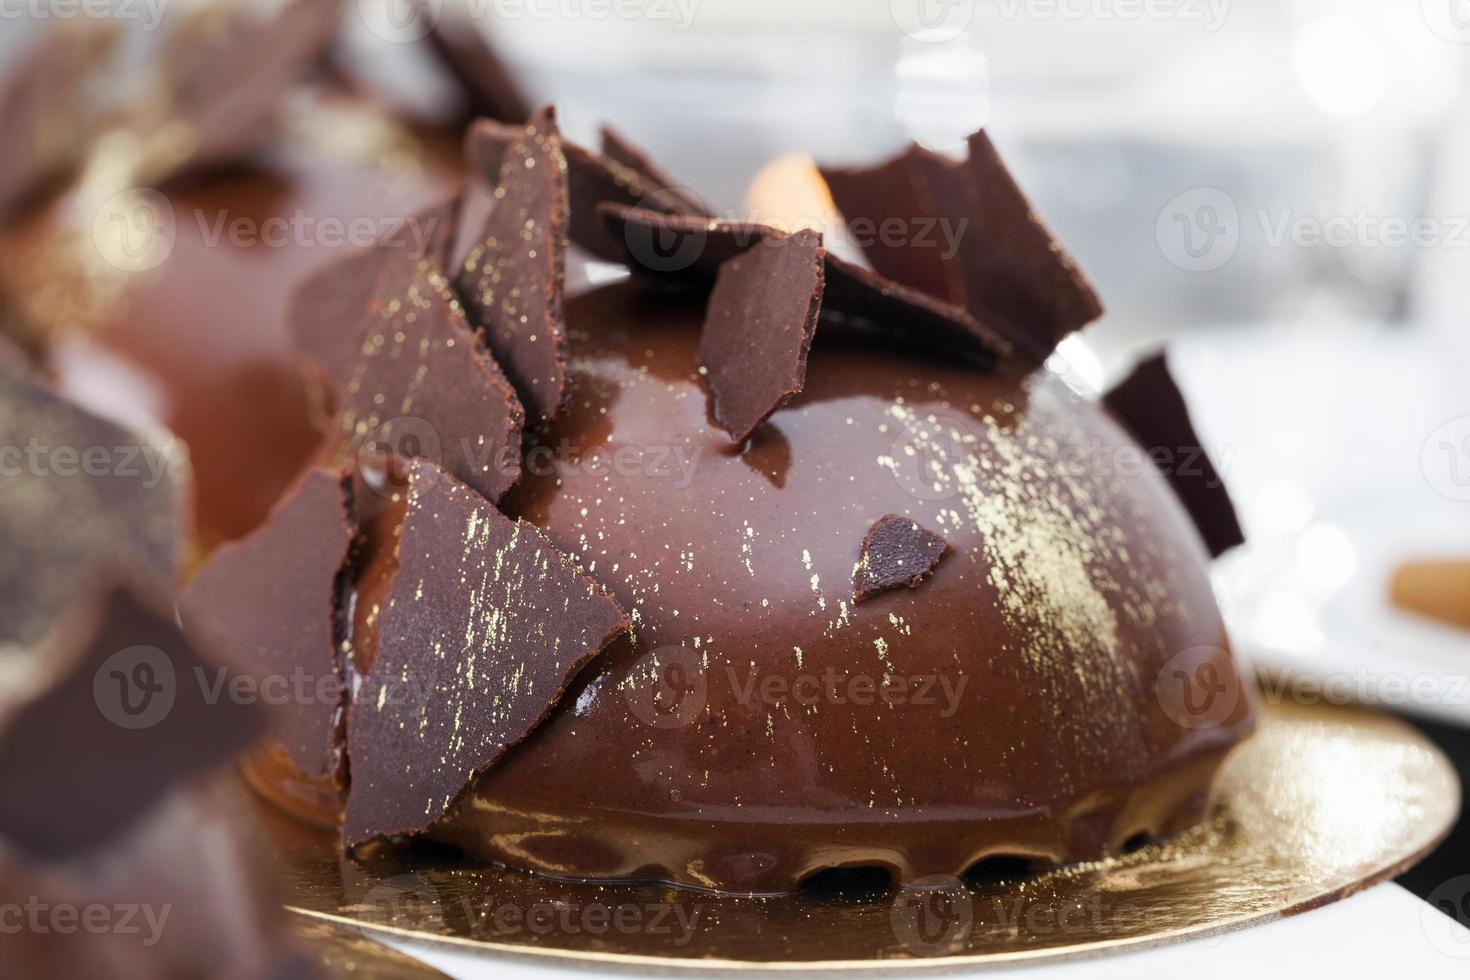 chokladgräddtårta gjord av chokladdeg foto